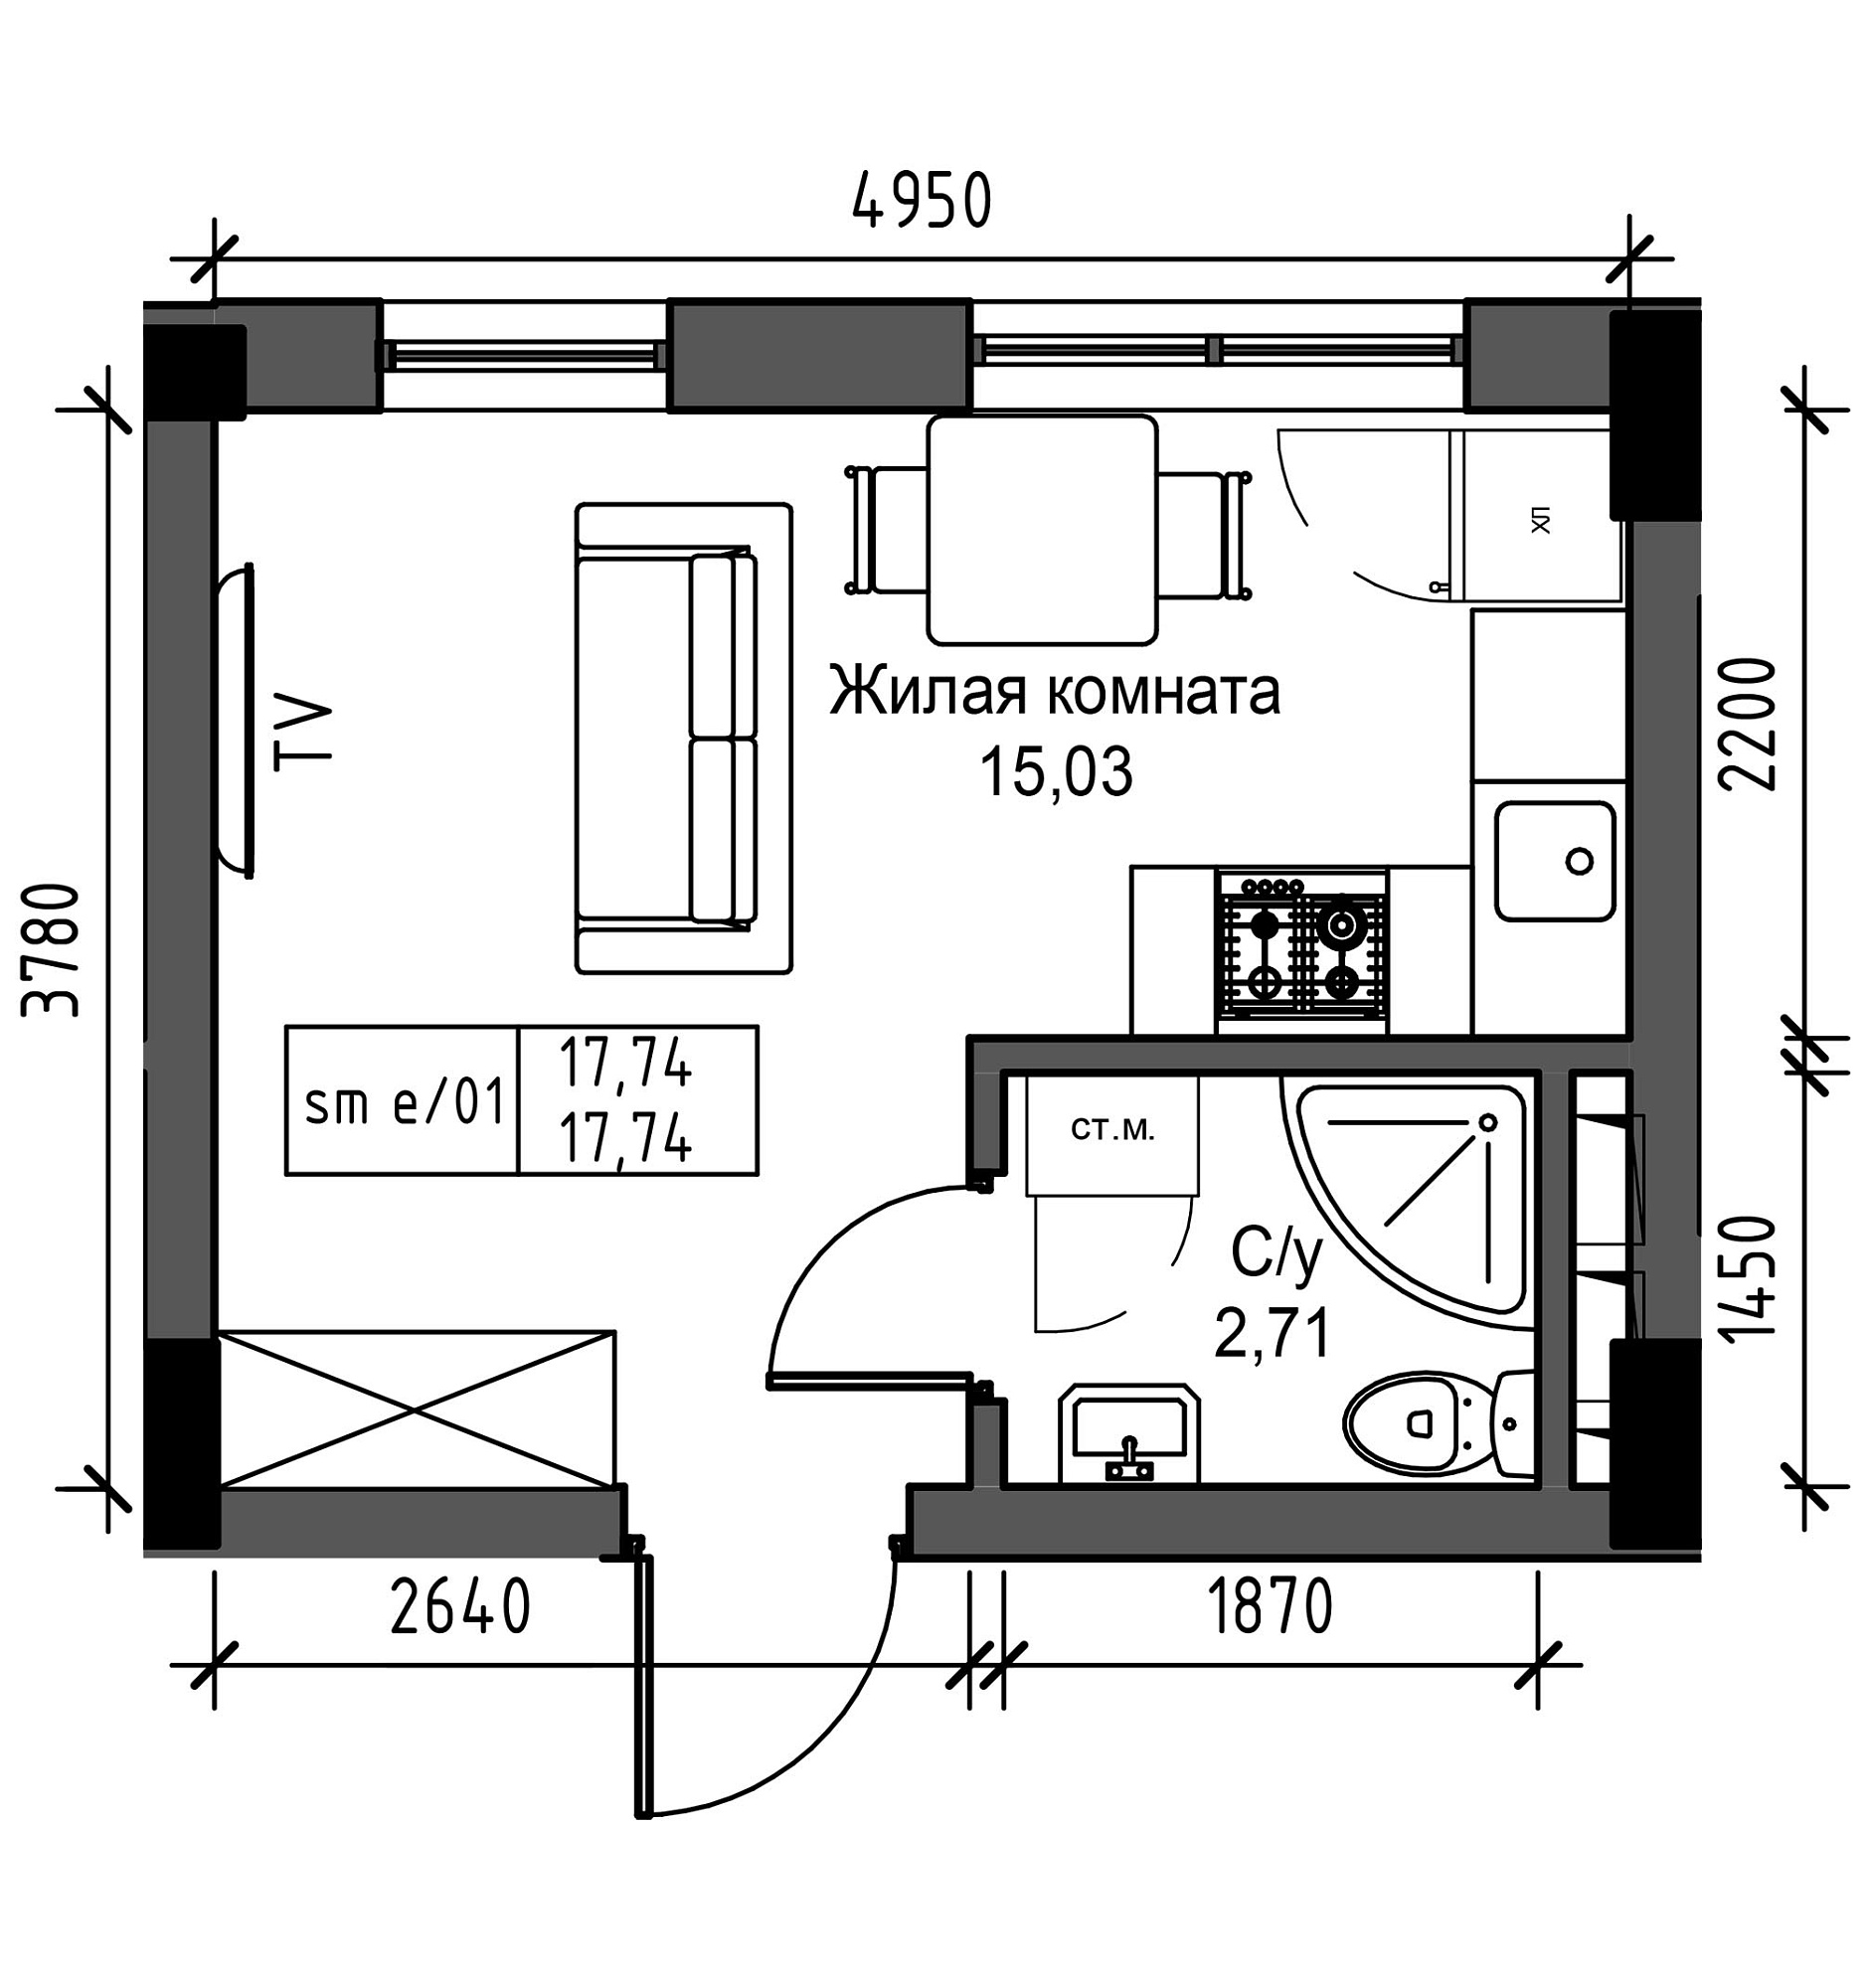 Планування Smart-квартира площею 17.74м2, UM-003-03/0015.